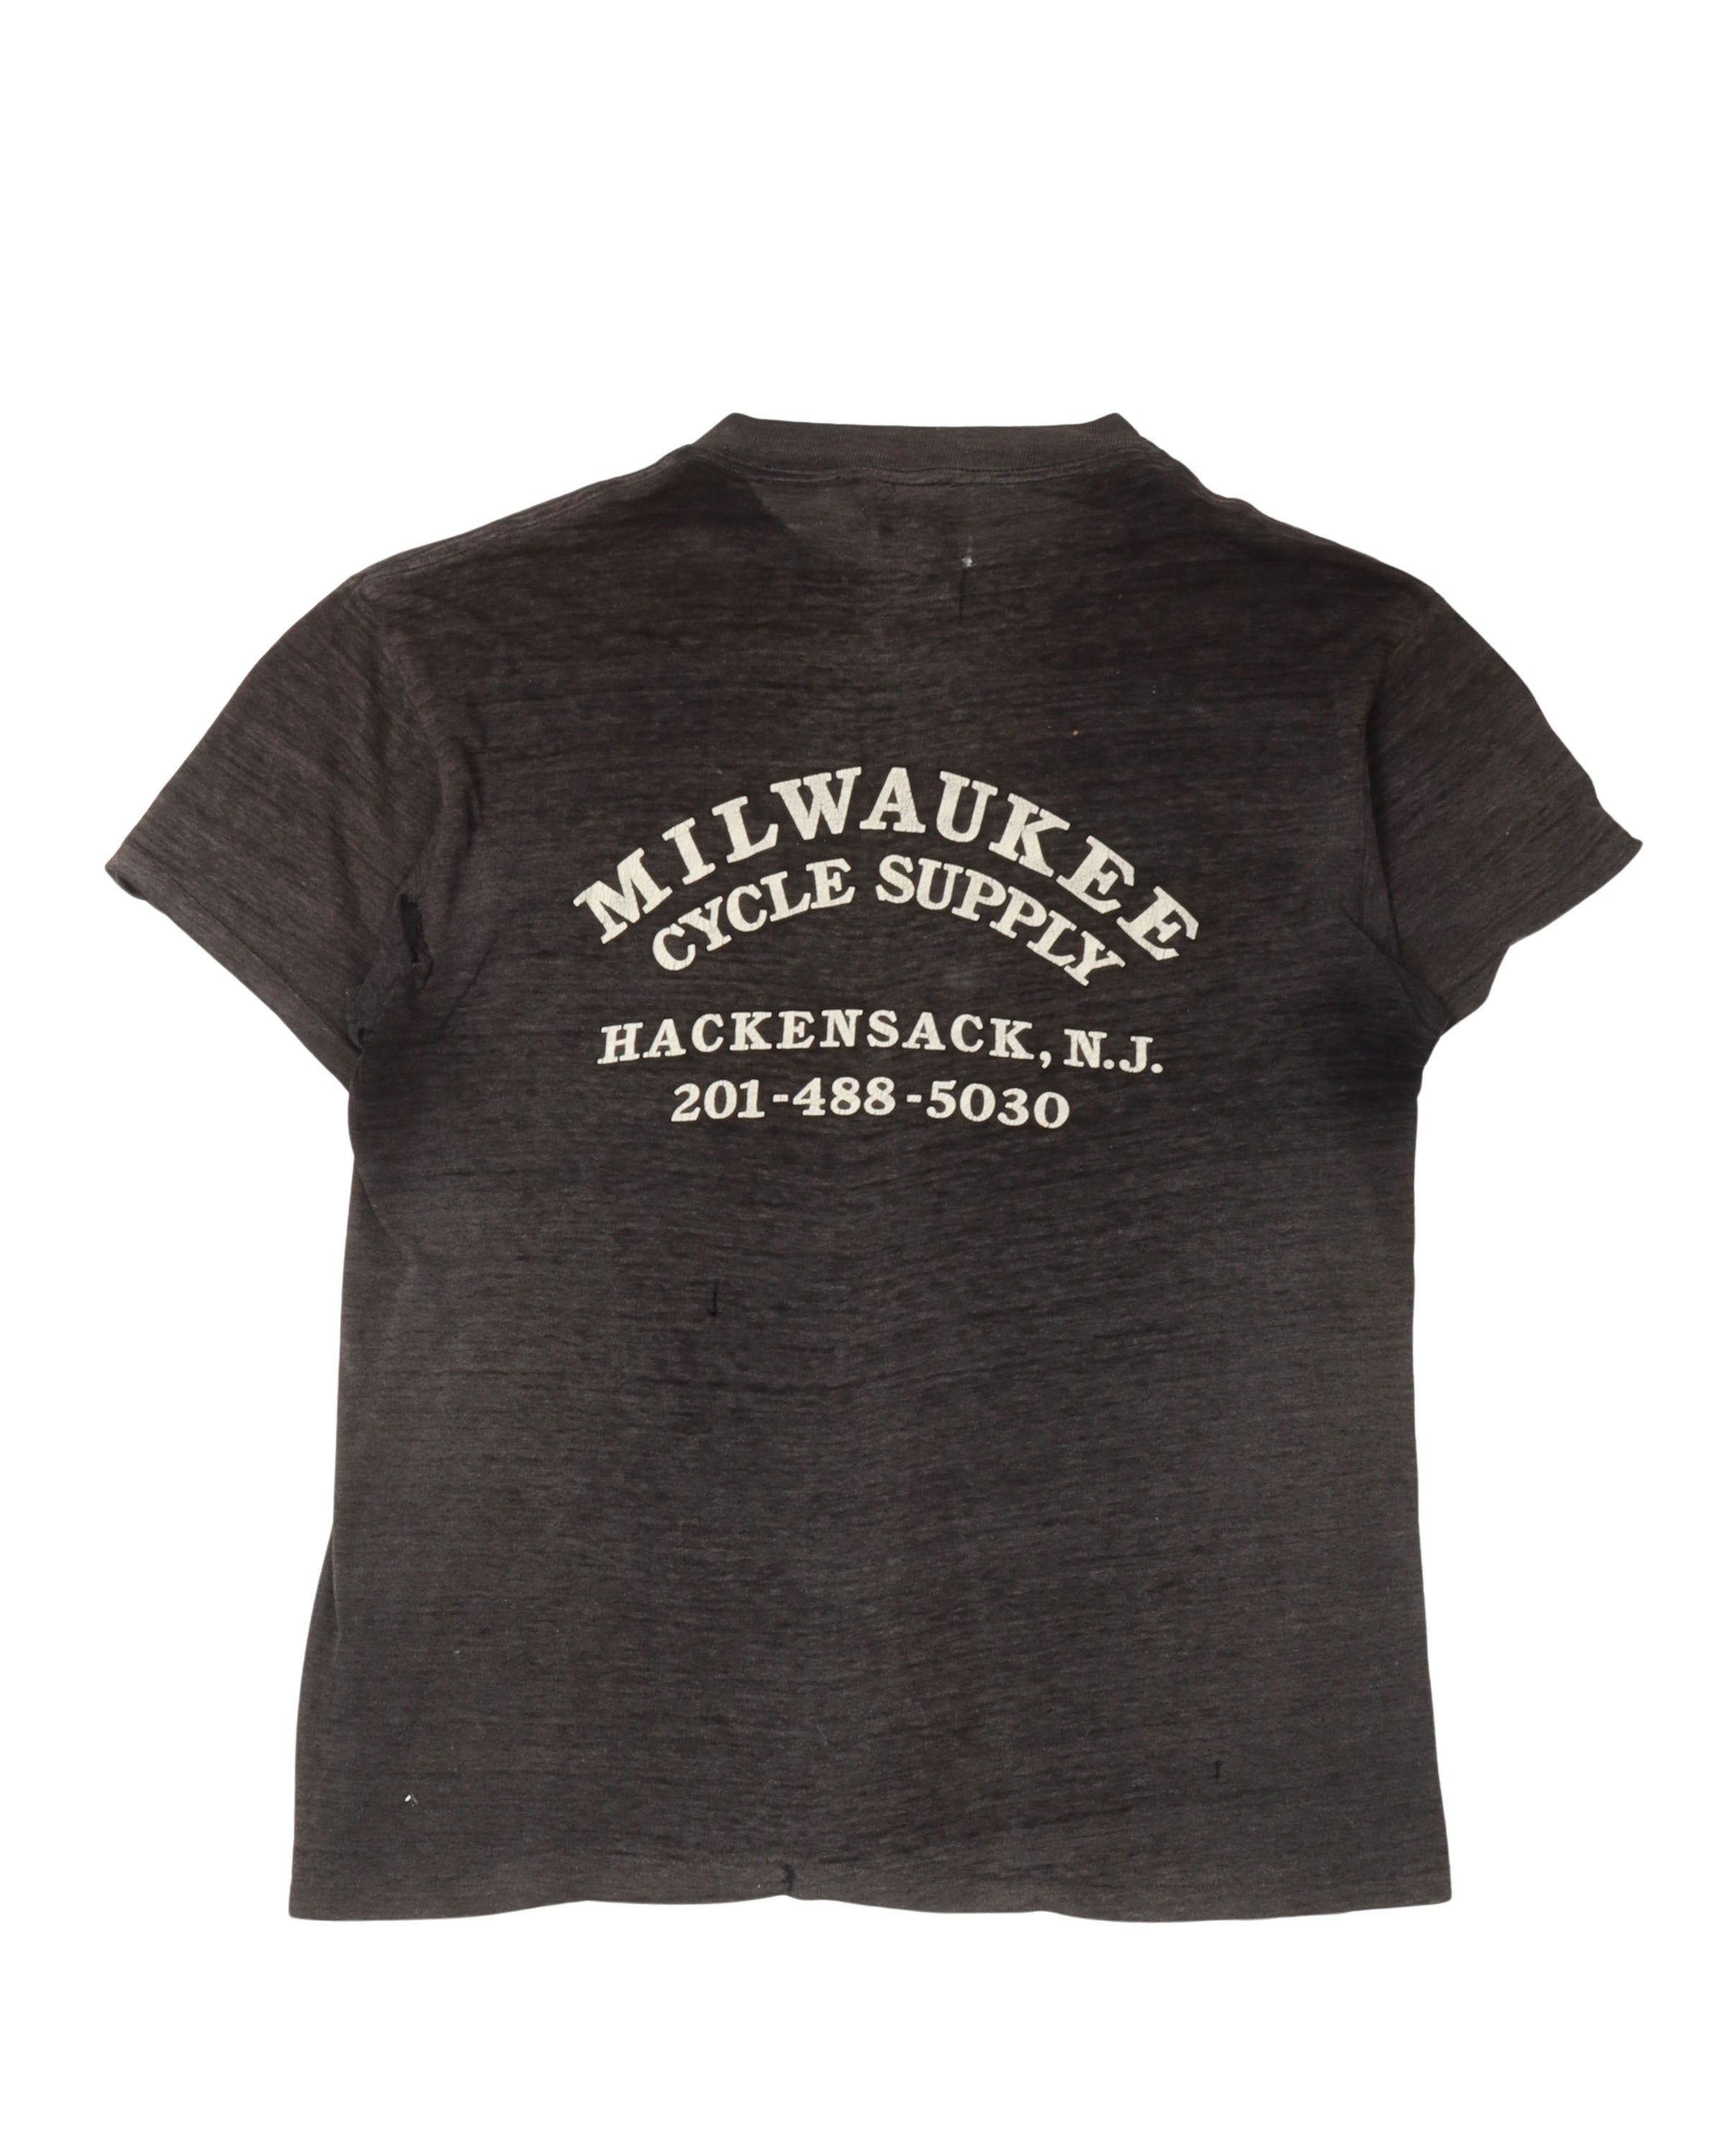 Harley Davidson Hackensack T-Shirt